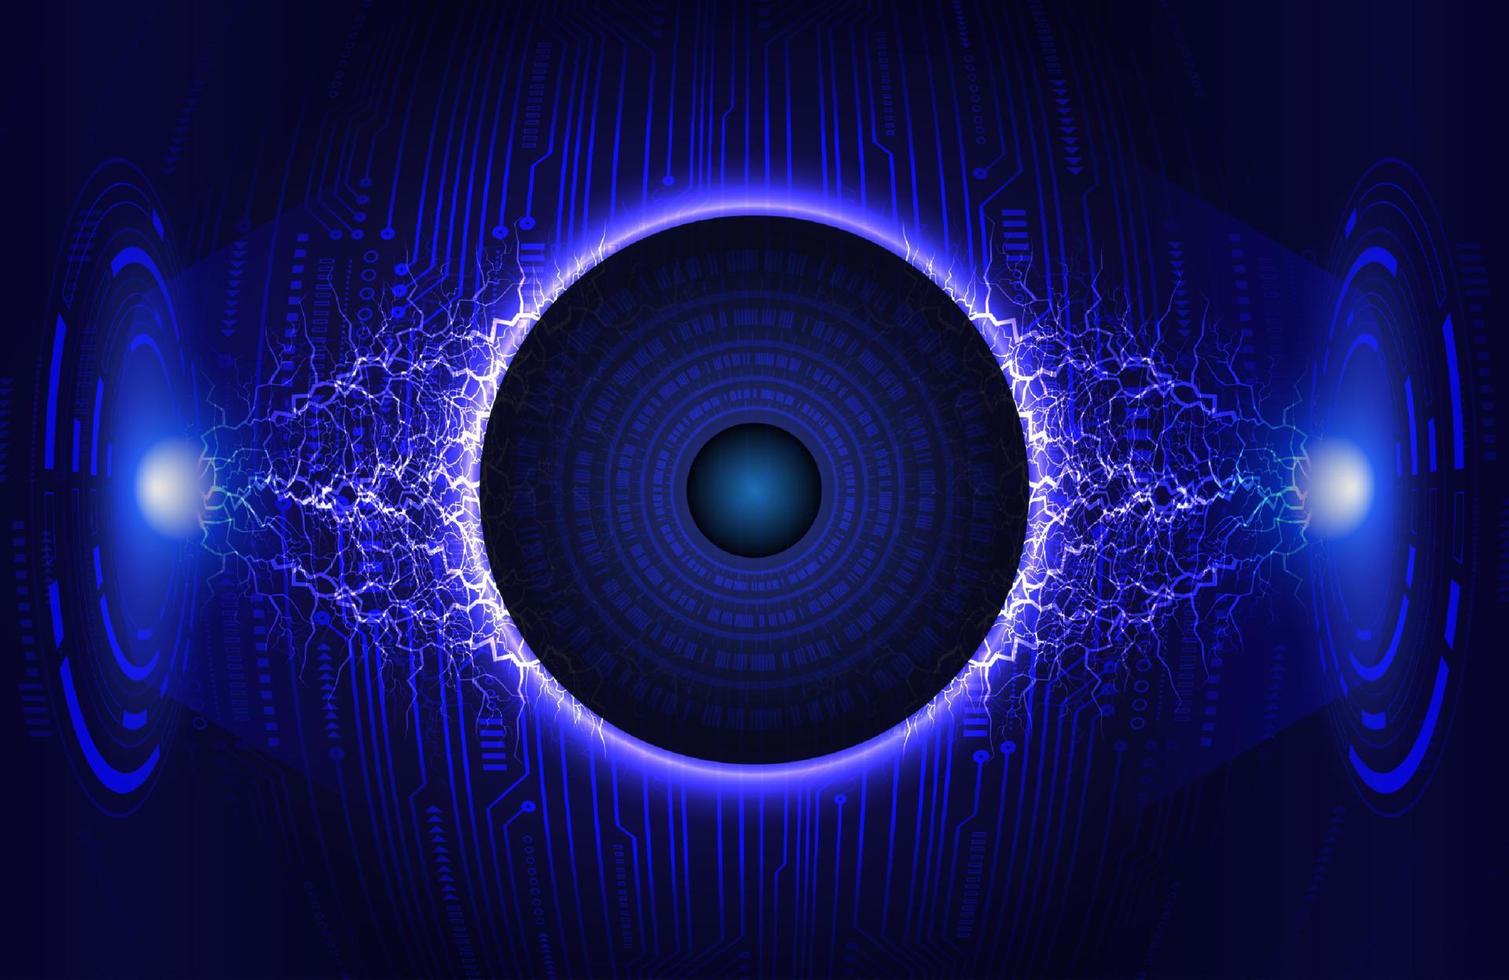 Modern Eye Holograph on Technology Background vector